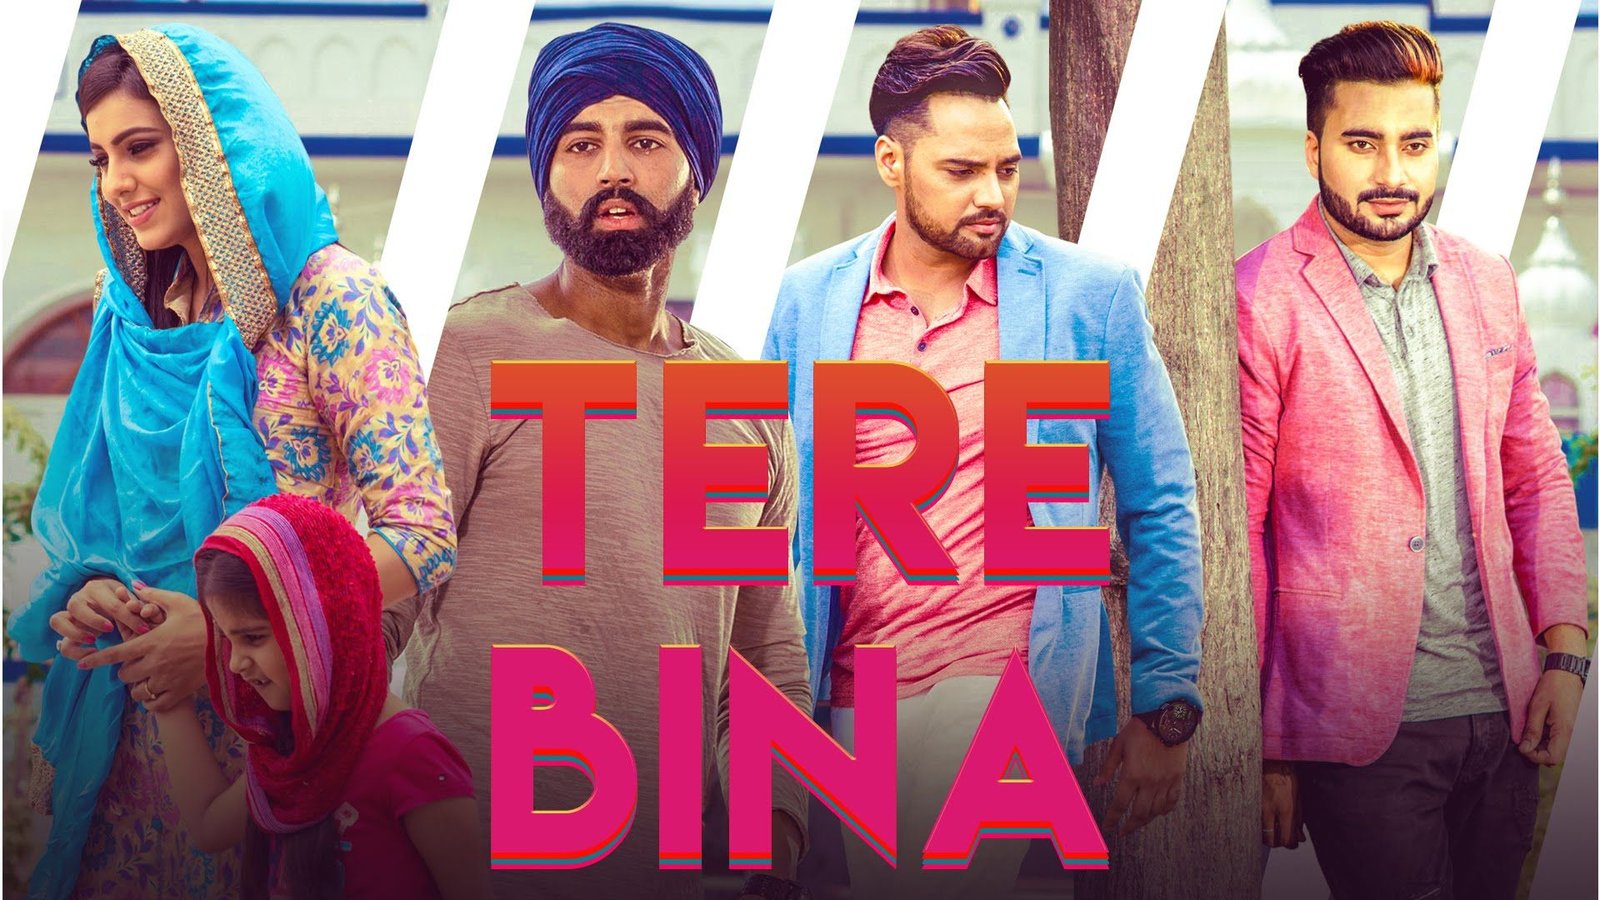 TERE BINA Song Lyrics – Monty & Waris feat. Parmish Verma, Ginni Kapoor -  Populyrics